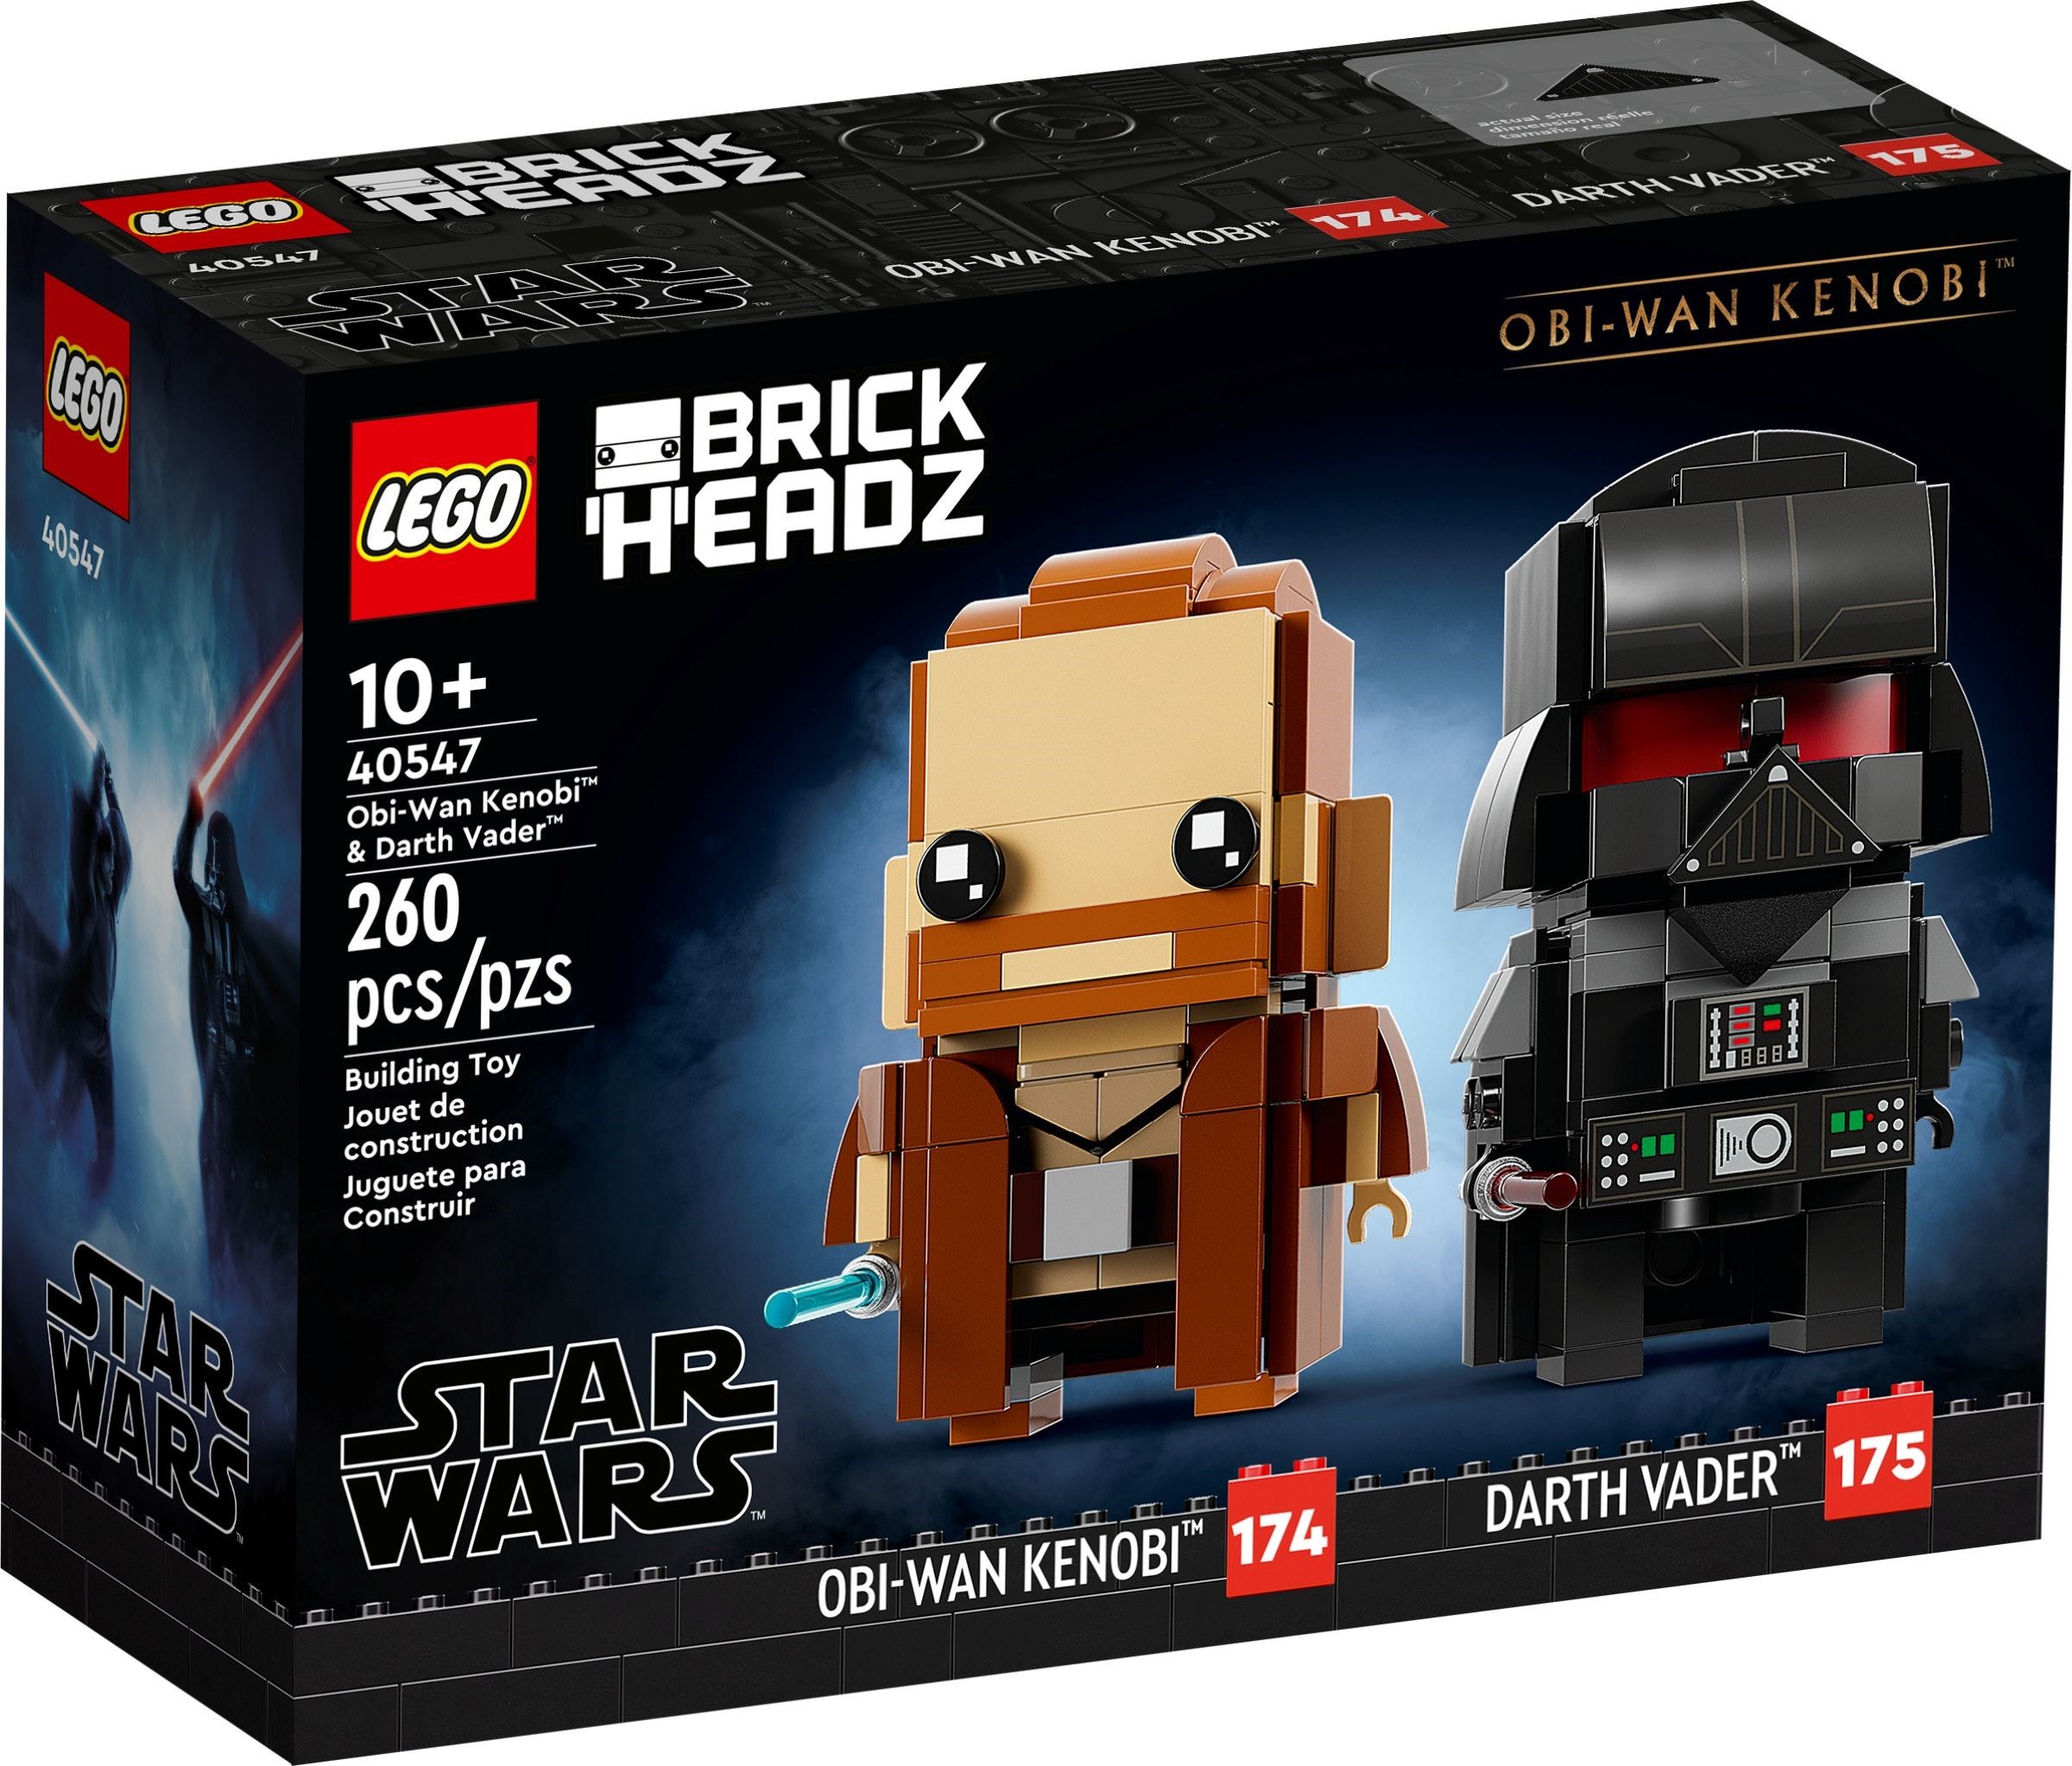 LEGO Star Wars Collectible Display Set 1, Brickipedia